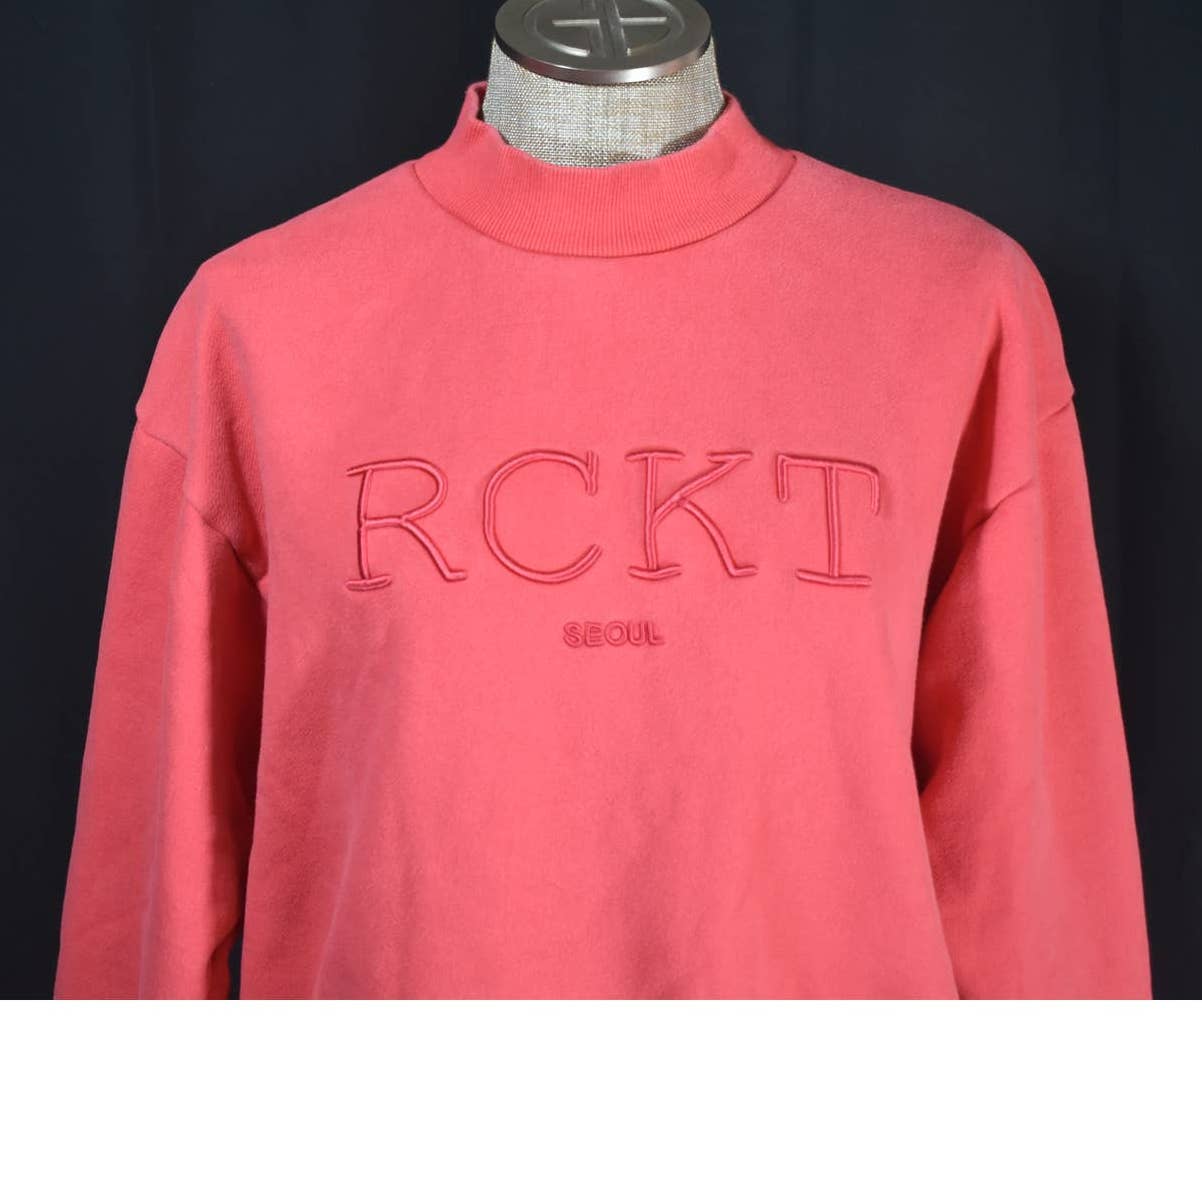 Rocket X Lunch Pink Cropped Mock Neck Oversized Sweatshirt - S